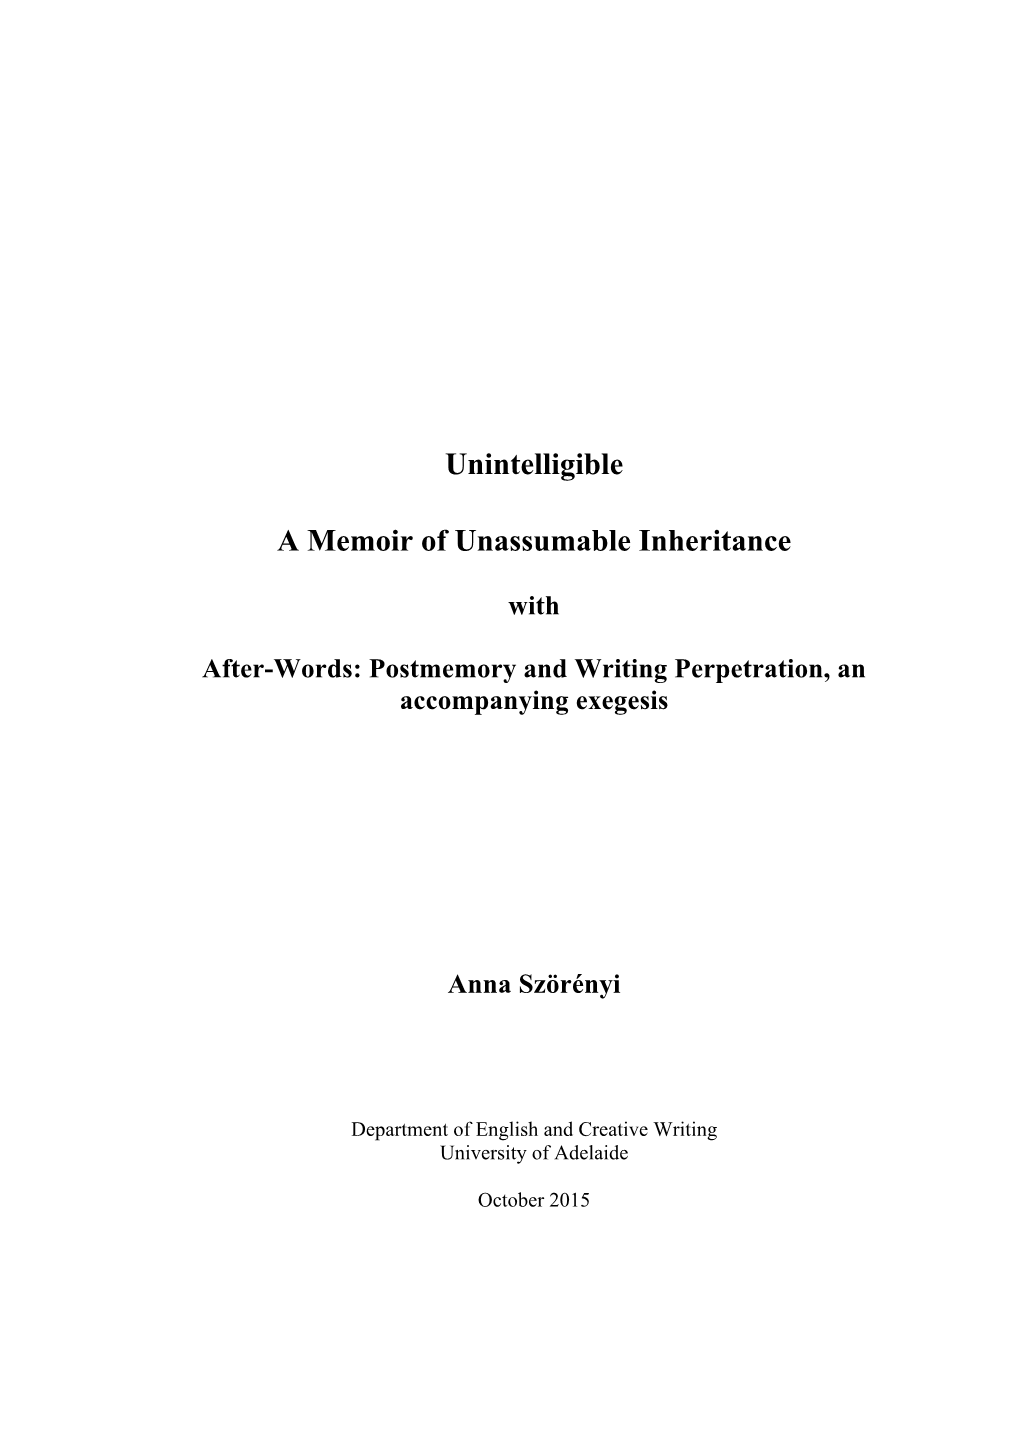 Unintelligible a Memoir of Unassumable Inheritance